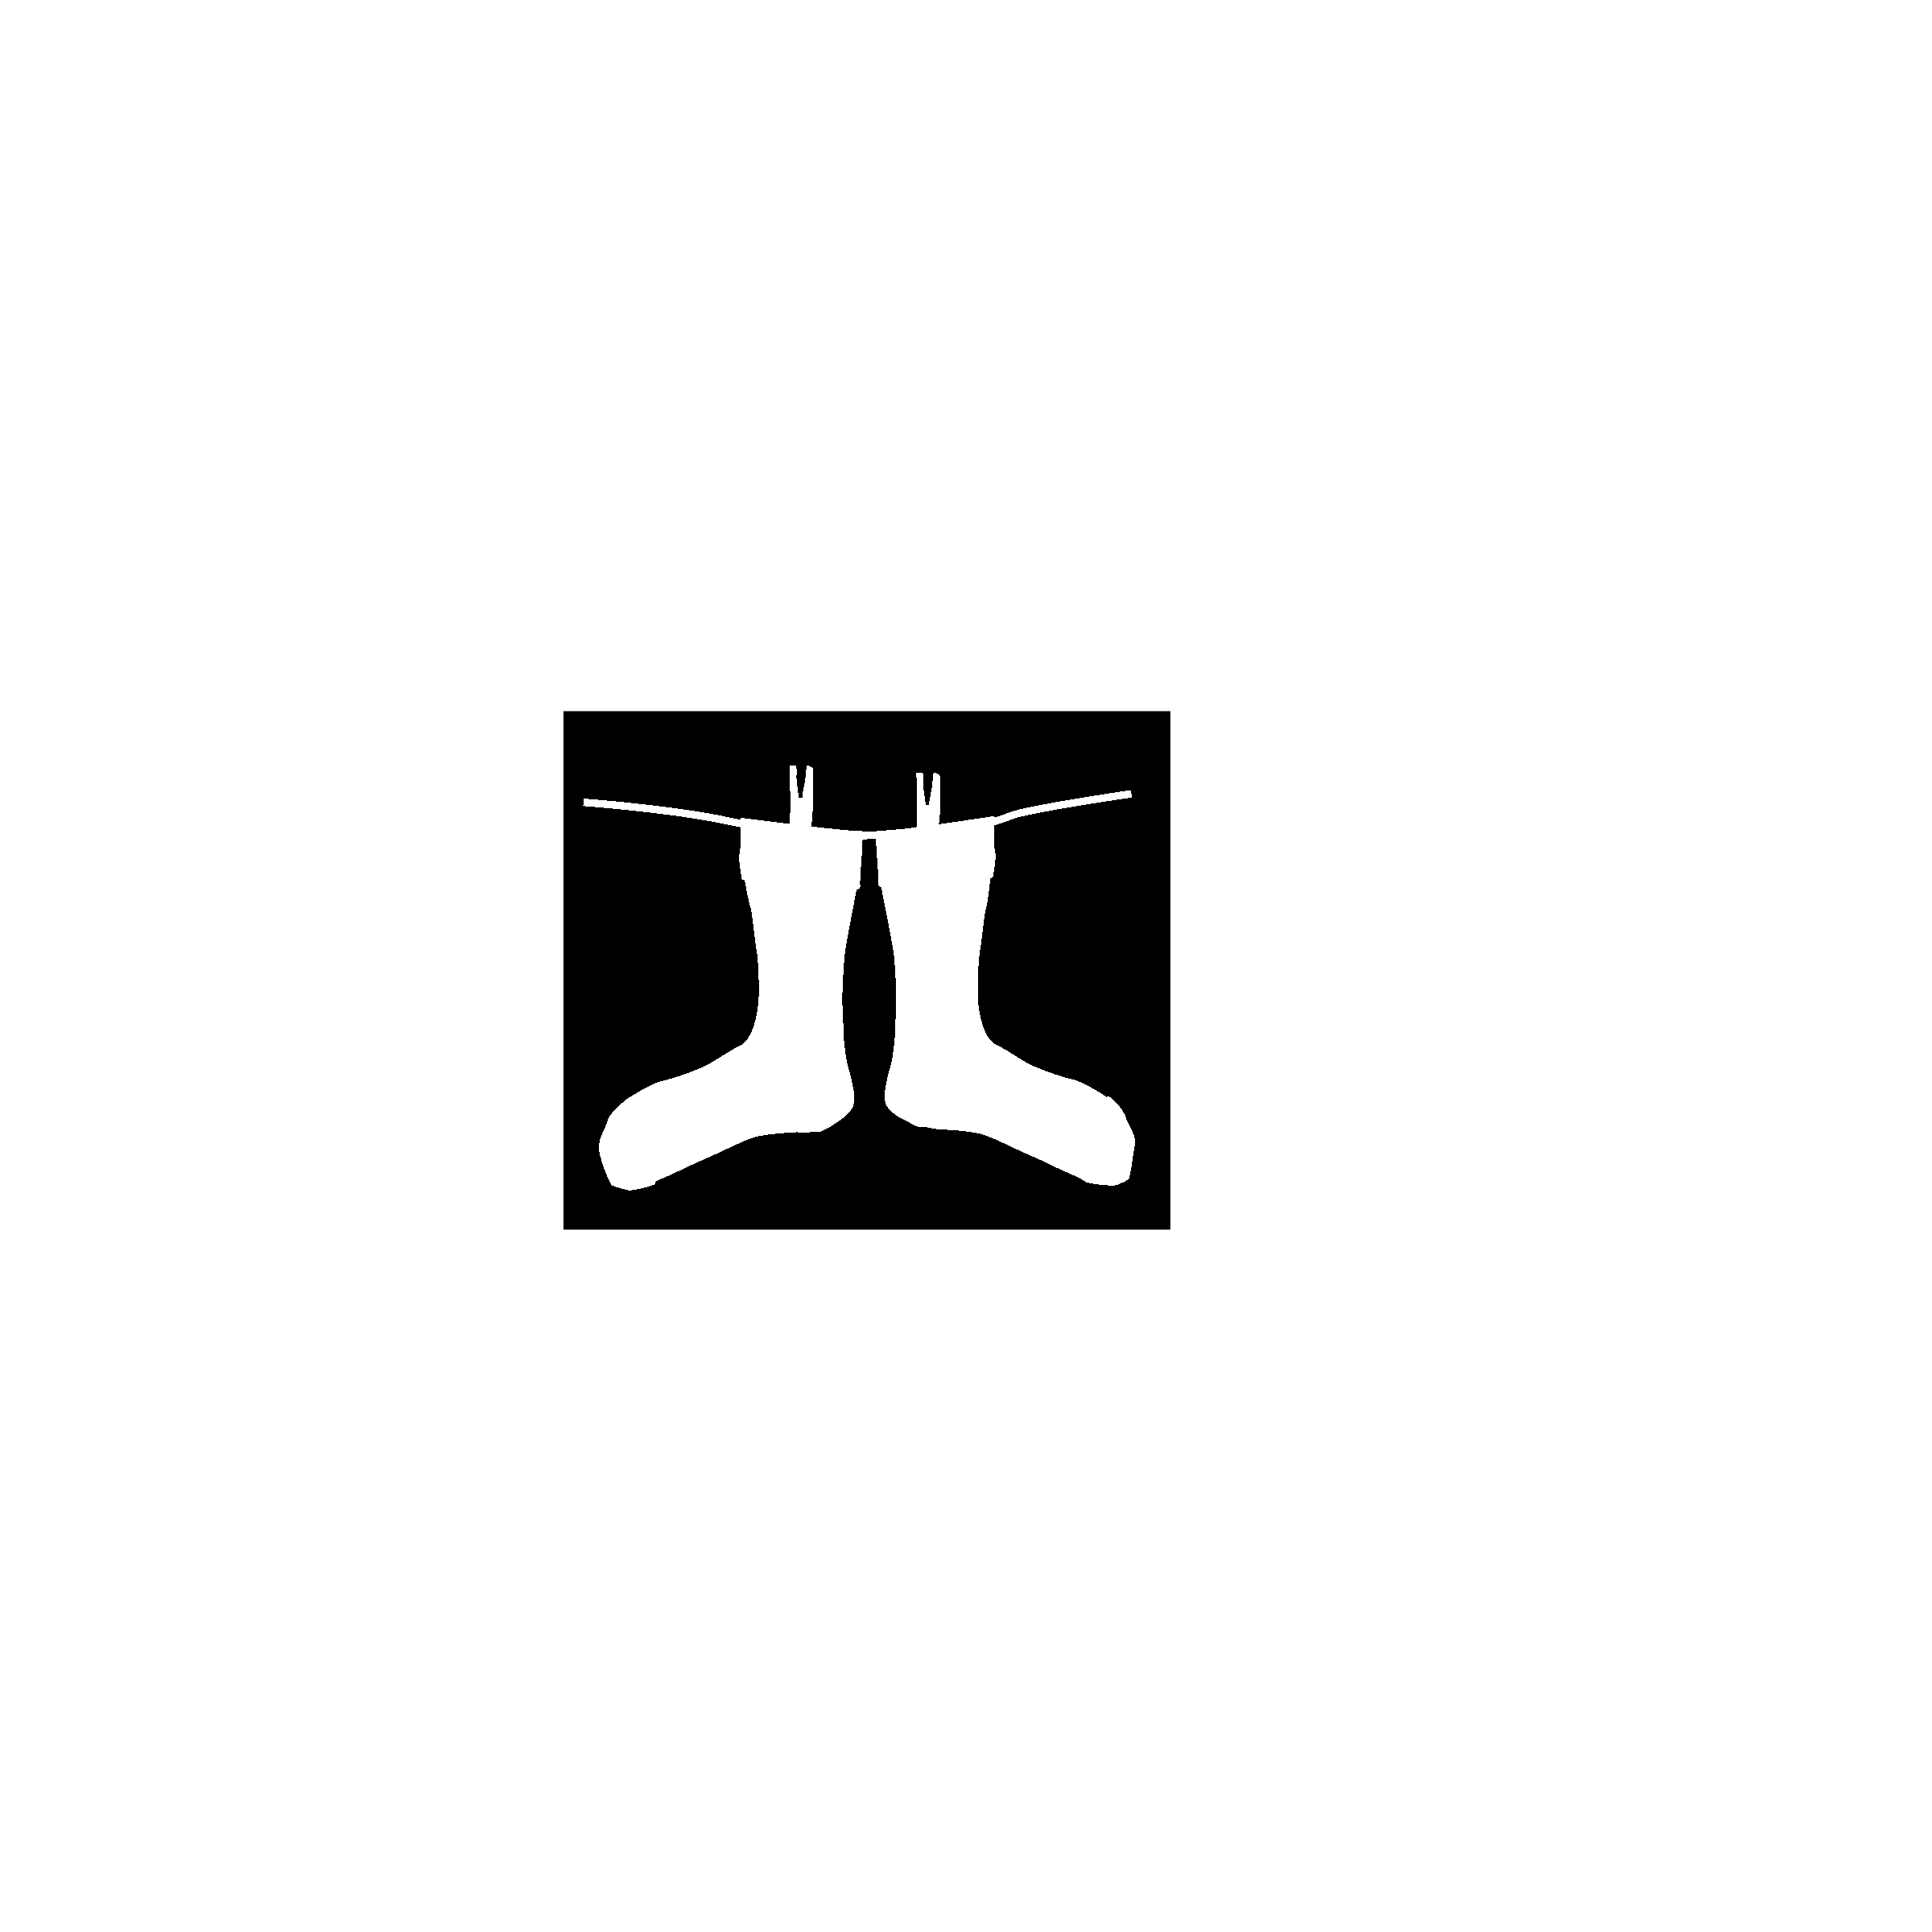 Kika Logo - Kika Logo PNG Transparent & SVG Vector - Freebie Supply